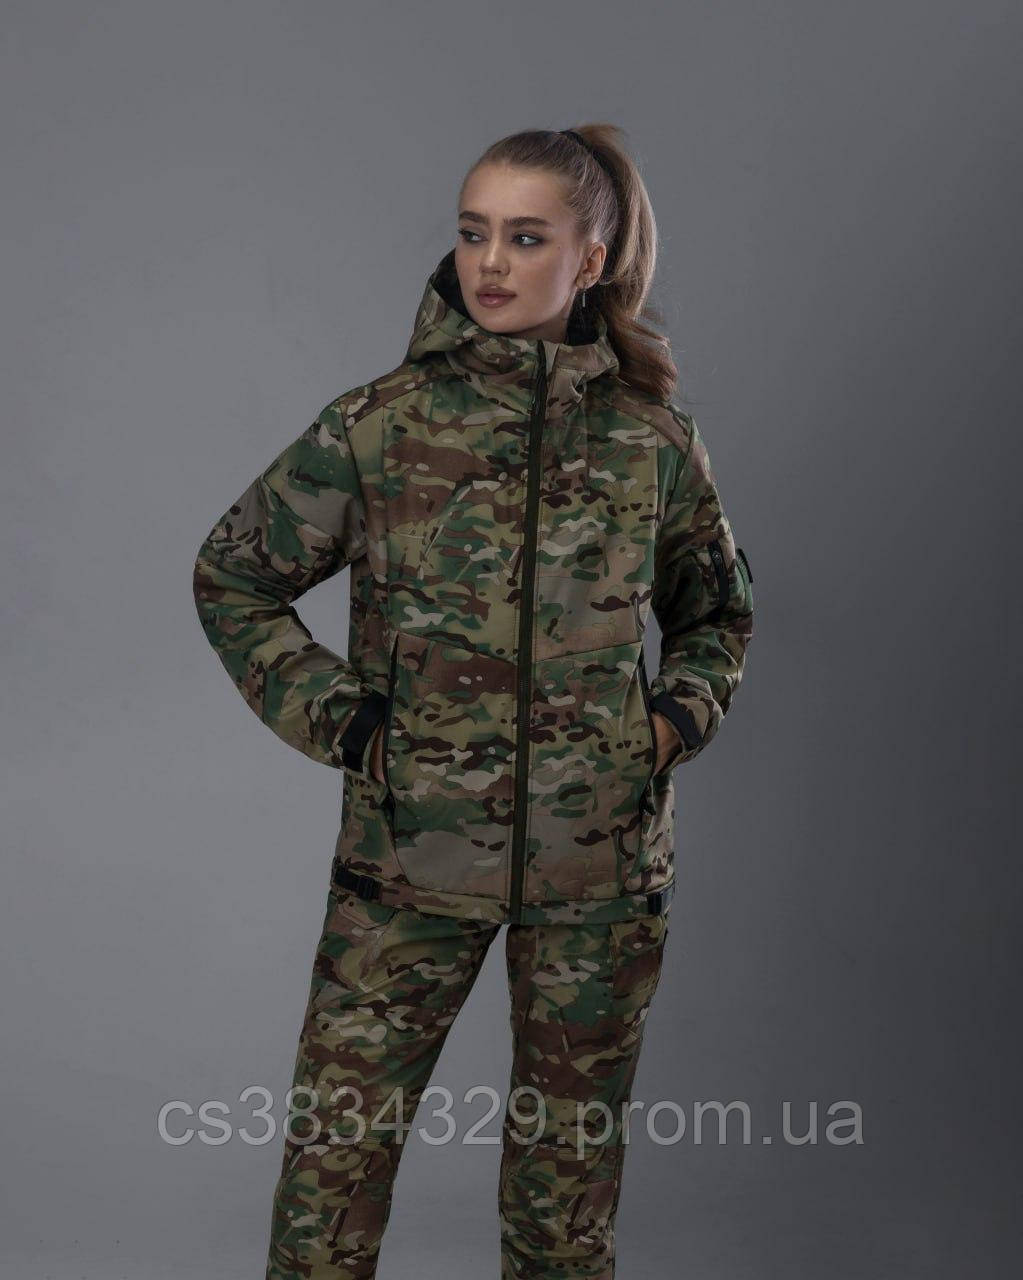 Куртка Softshell BEZET Робокоп 2.0 мультикам Жіноча тактична військова куртка мультикам камуфляж